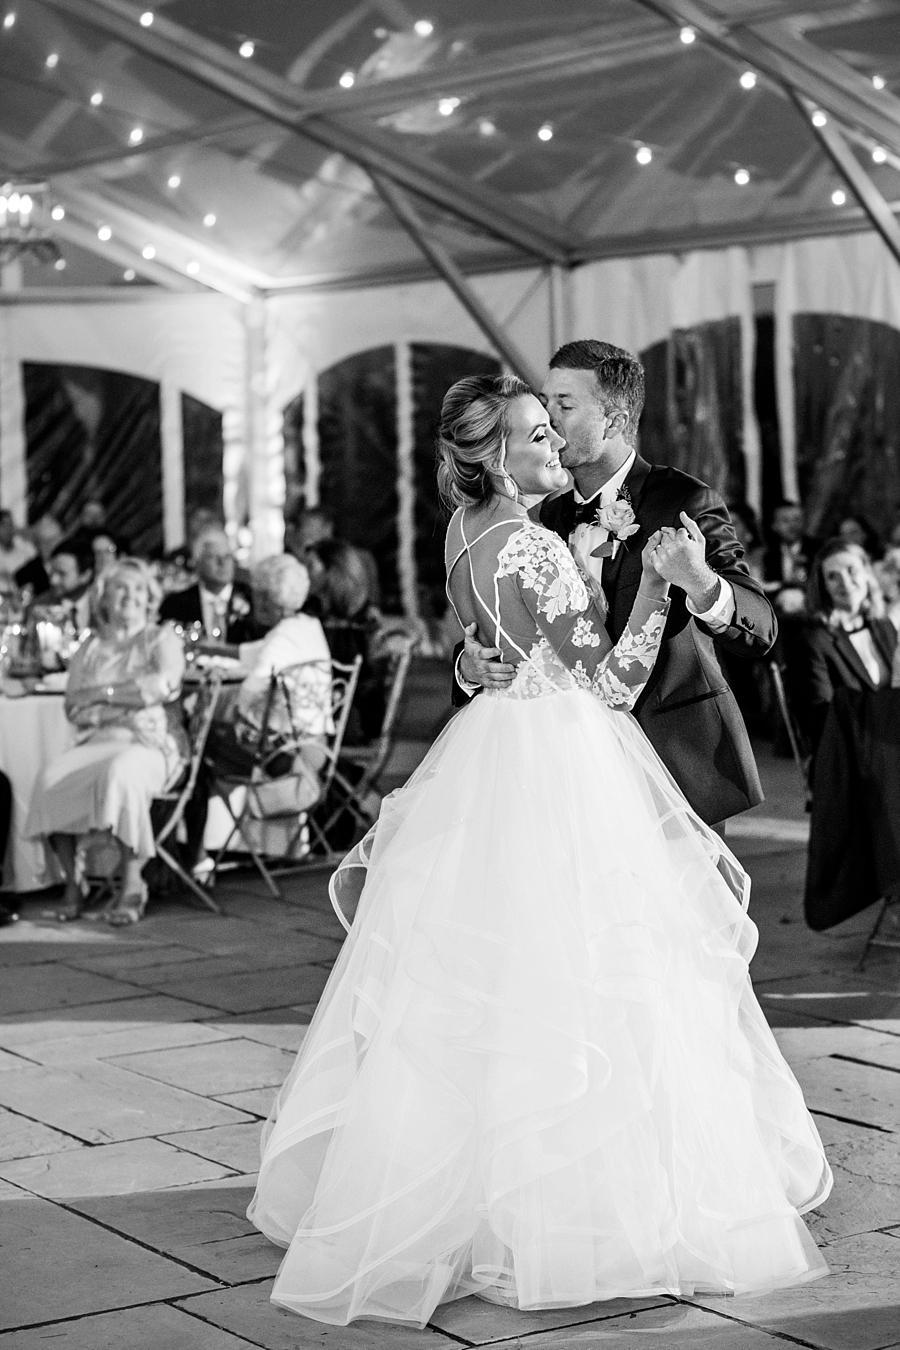 Alex & Taylor | The Market at Grelen, Virginia Wedding Photographer